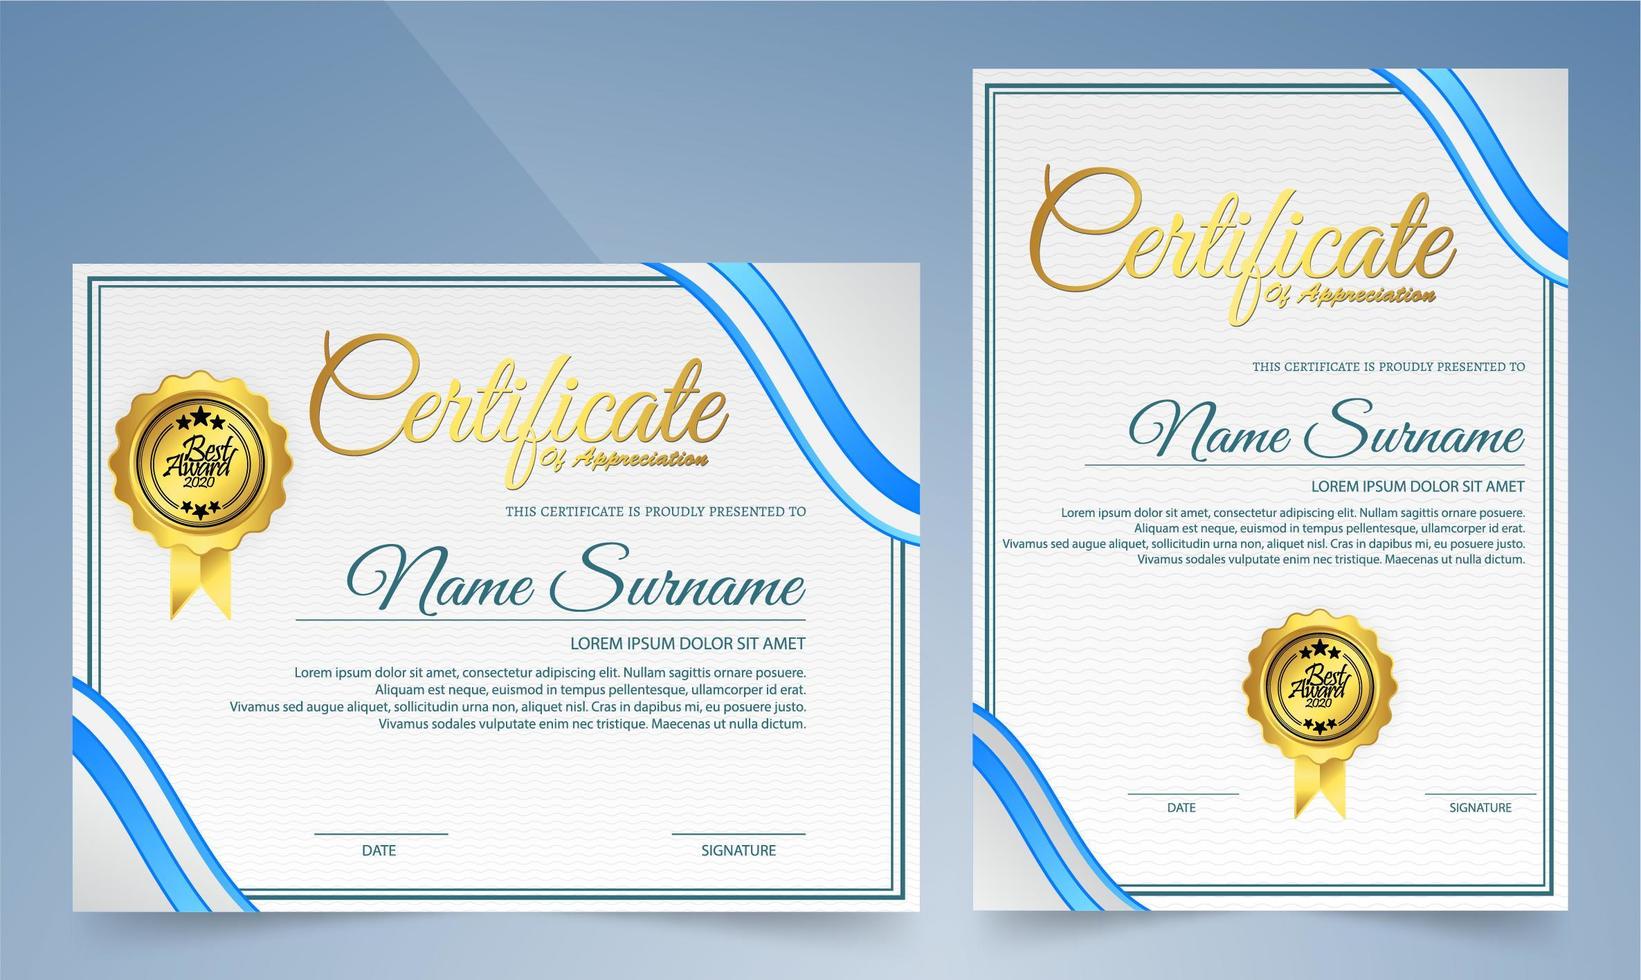 Certificate of elegance modern blue templates vector